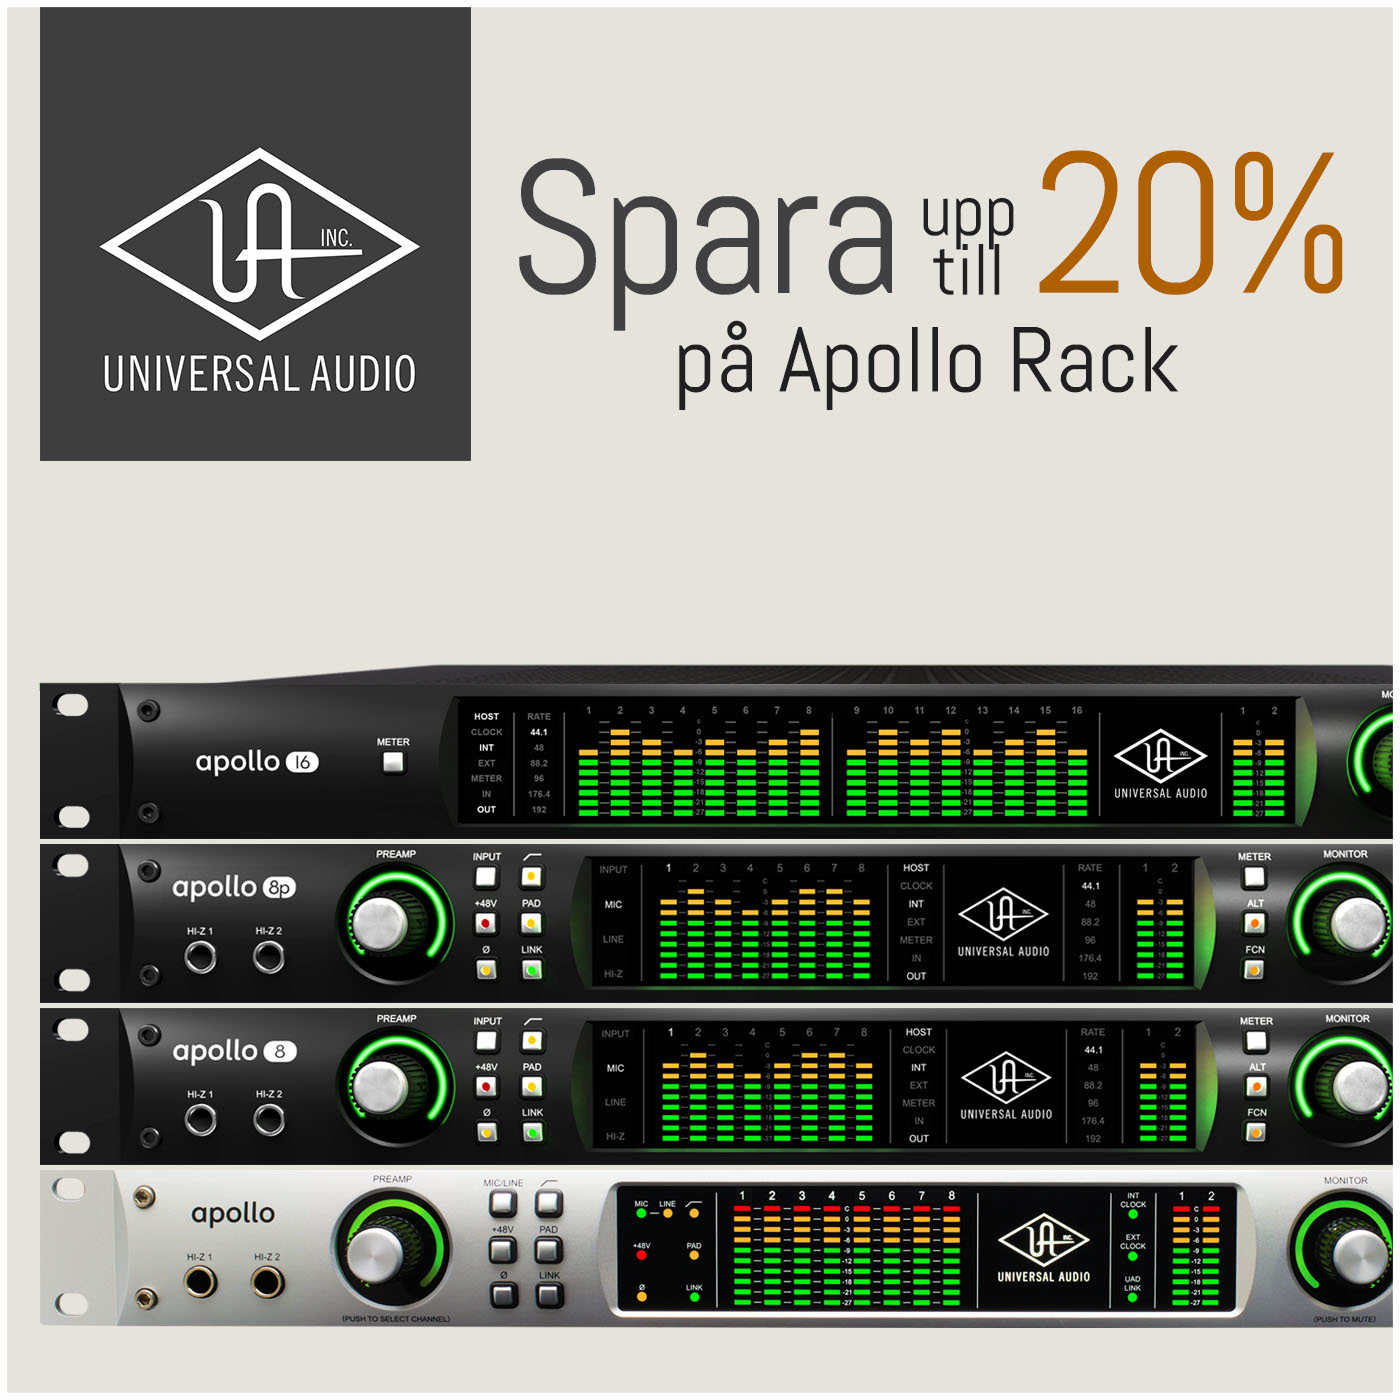 Universal Audio kampanj – Spara 20% på Apollo Rack